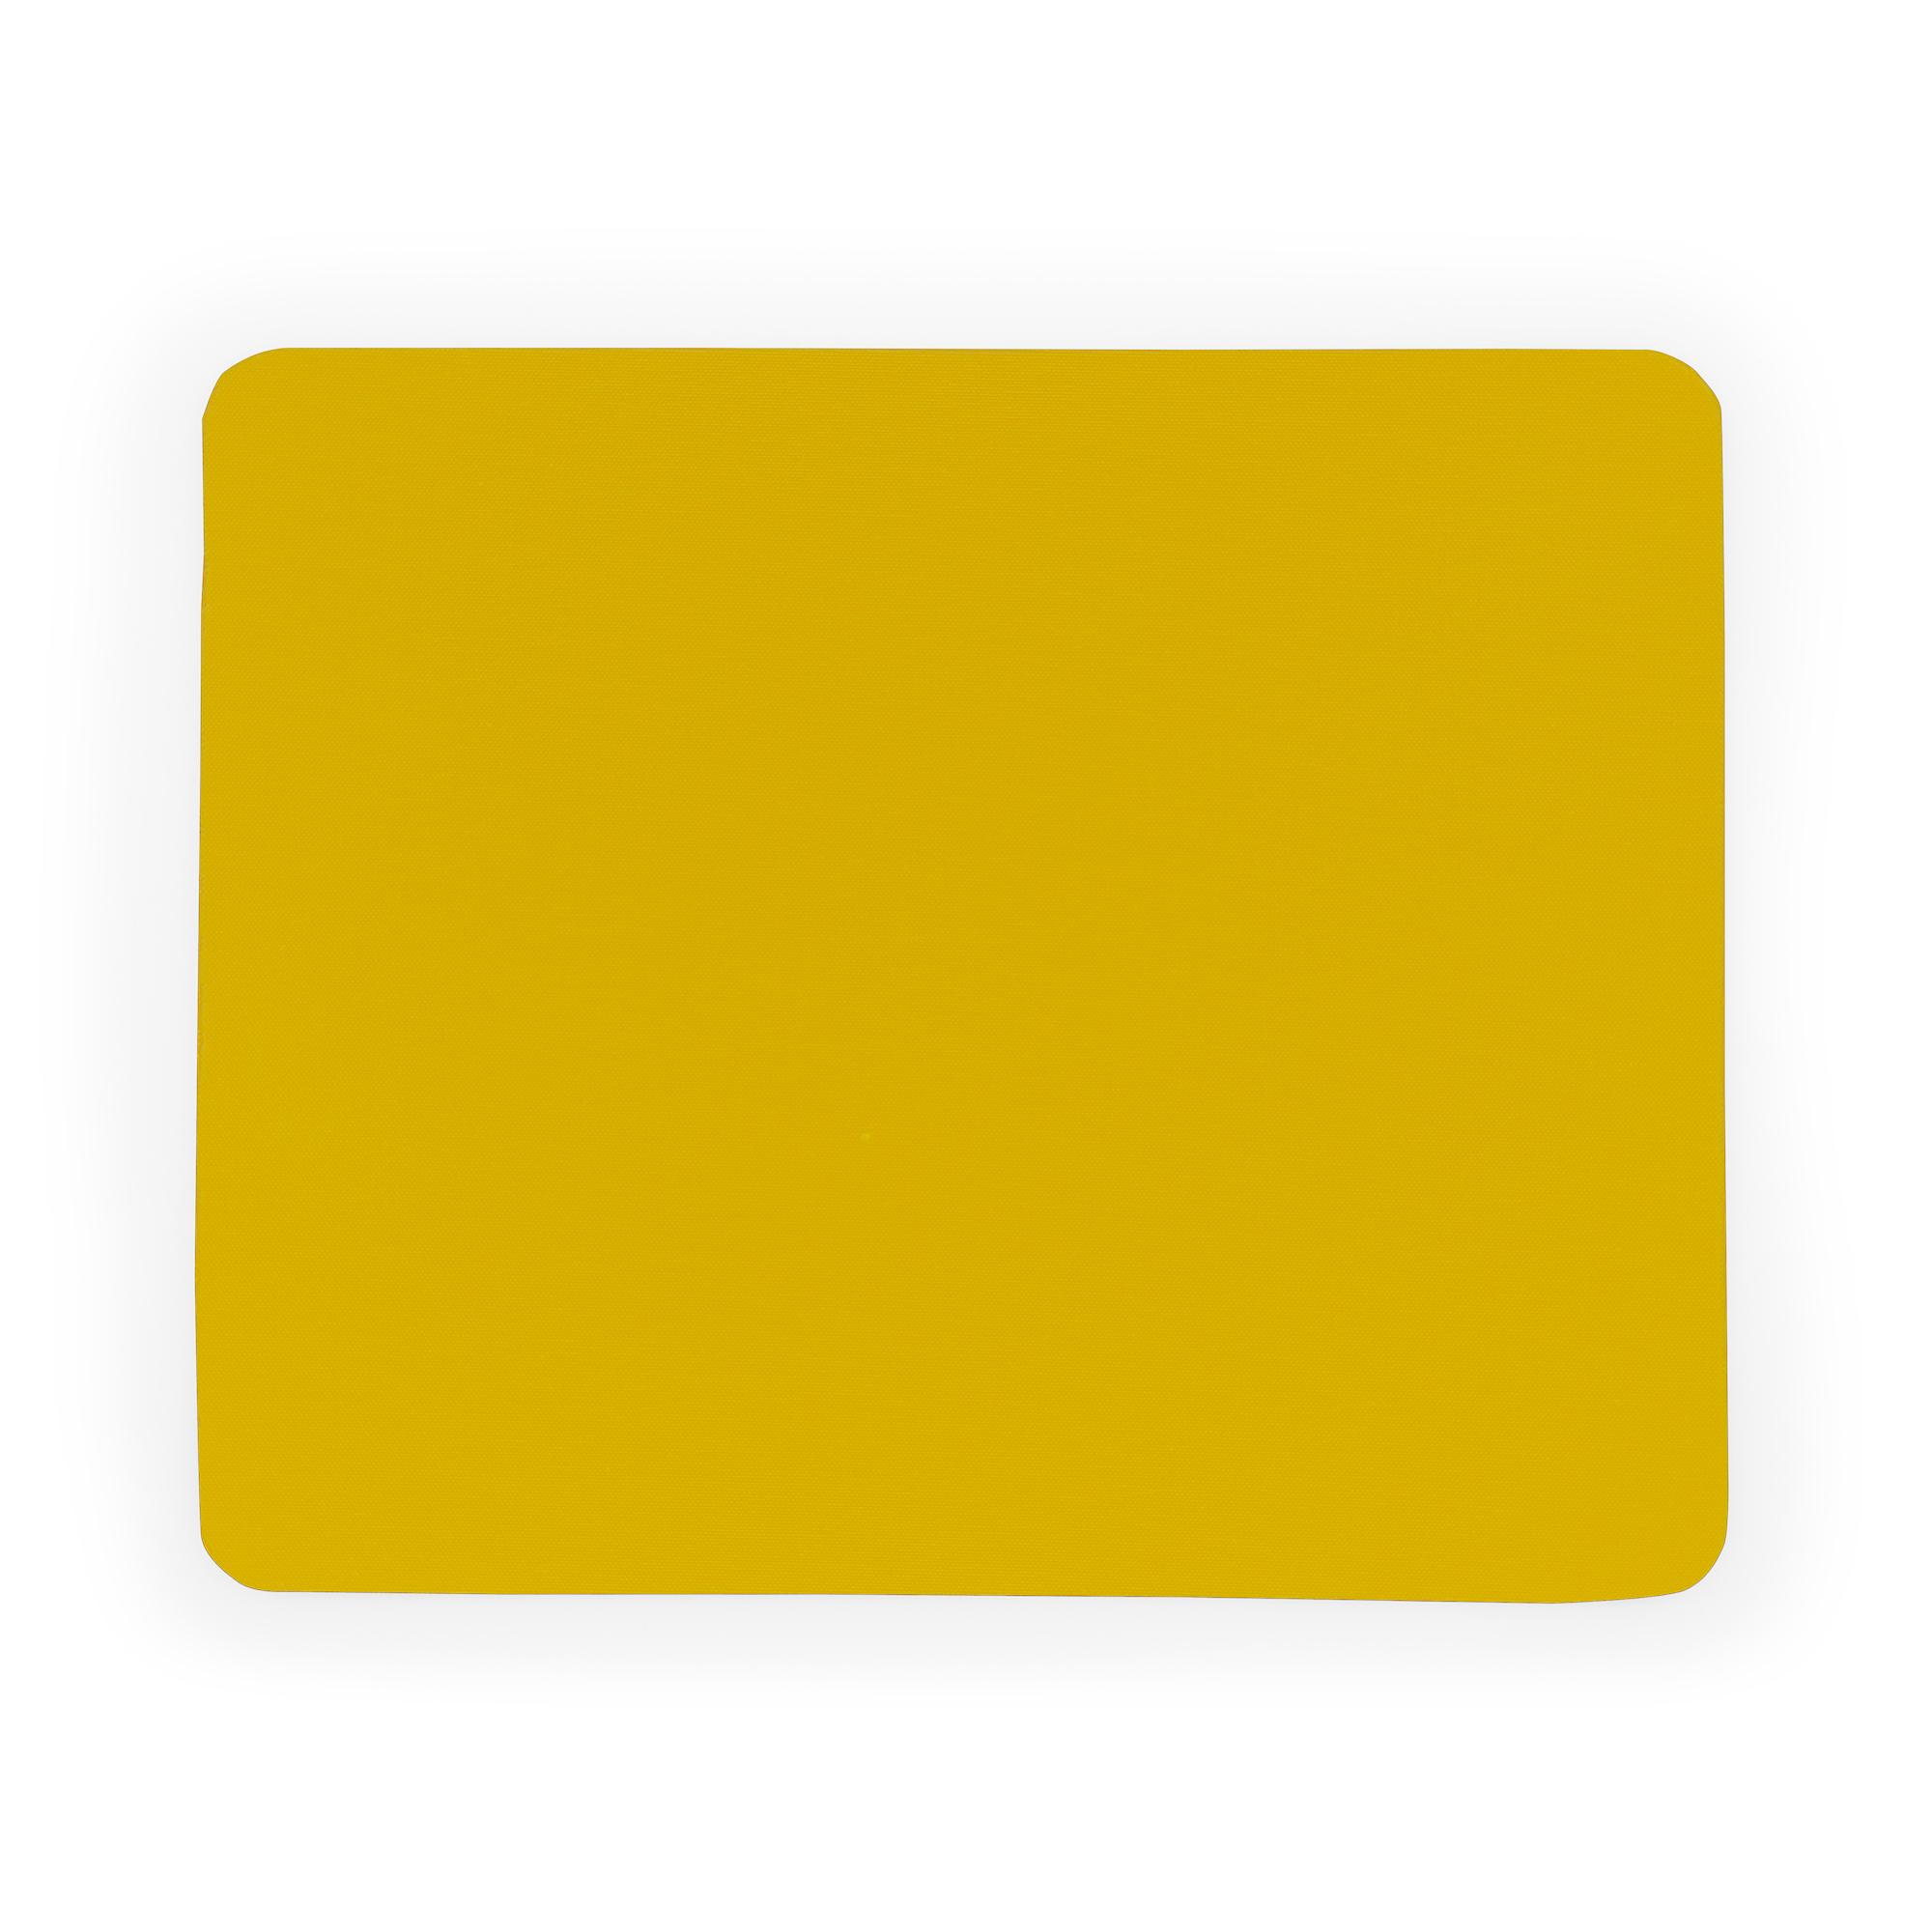 2575-mood-tappetino-per-mouse-giallo.jpg